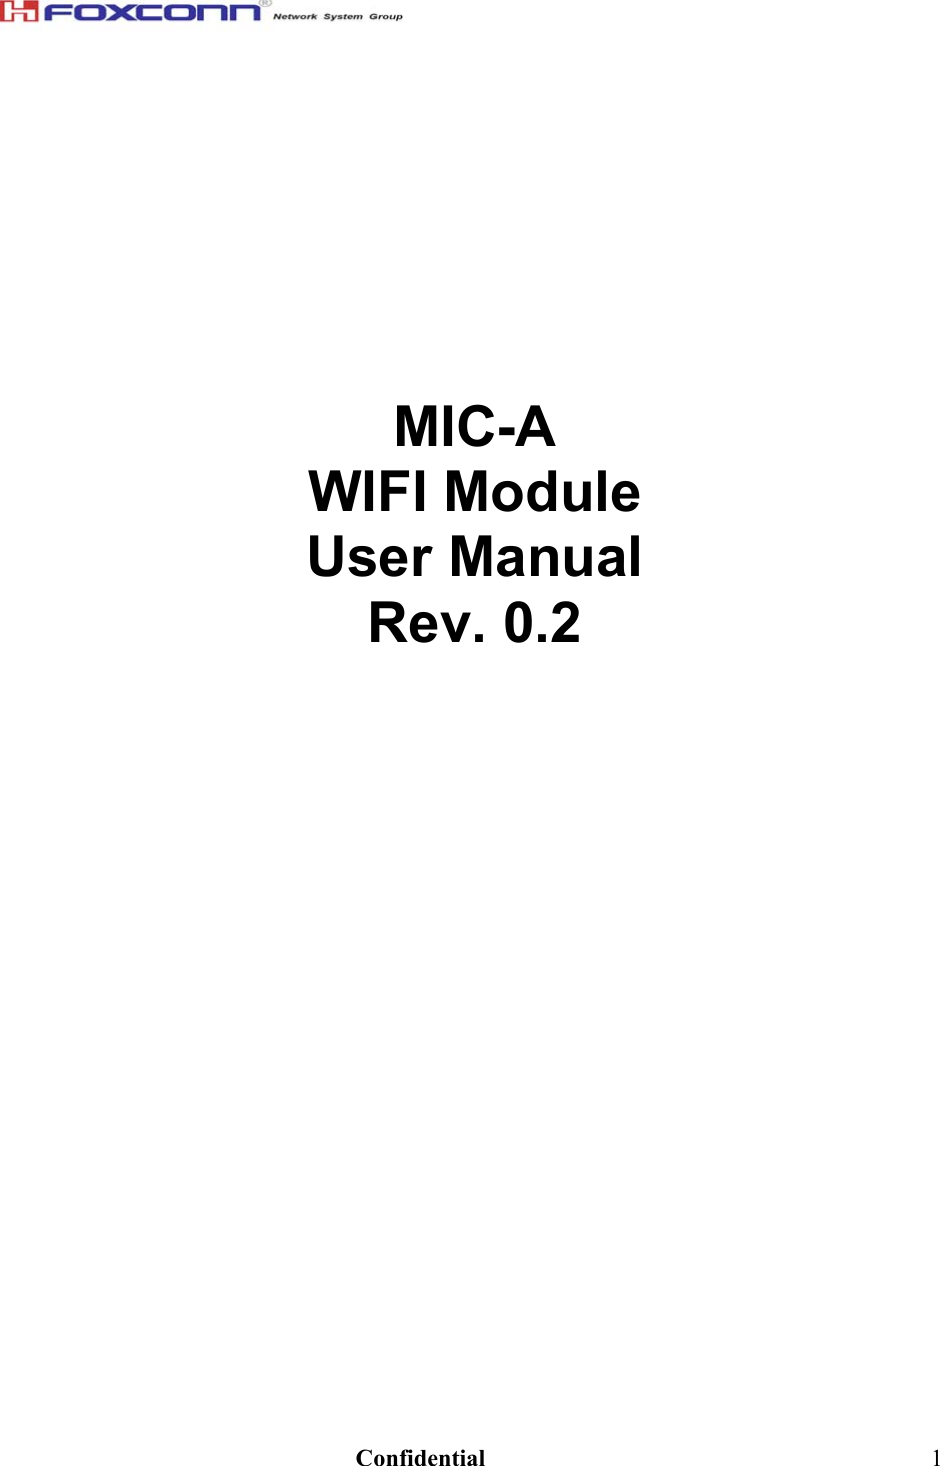                                                                               Confidential  1                                                       MIC-A WIFI Module  User Manual  Rev. 0.2                                